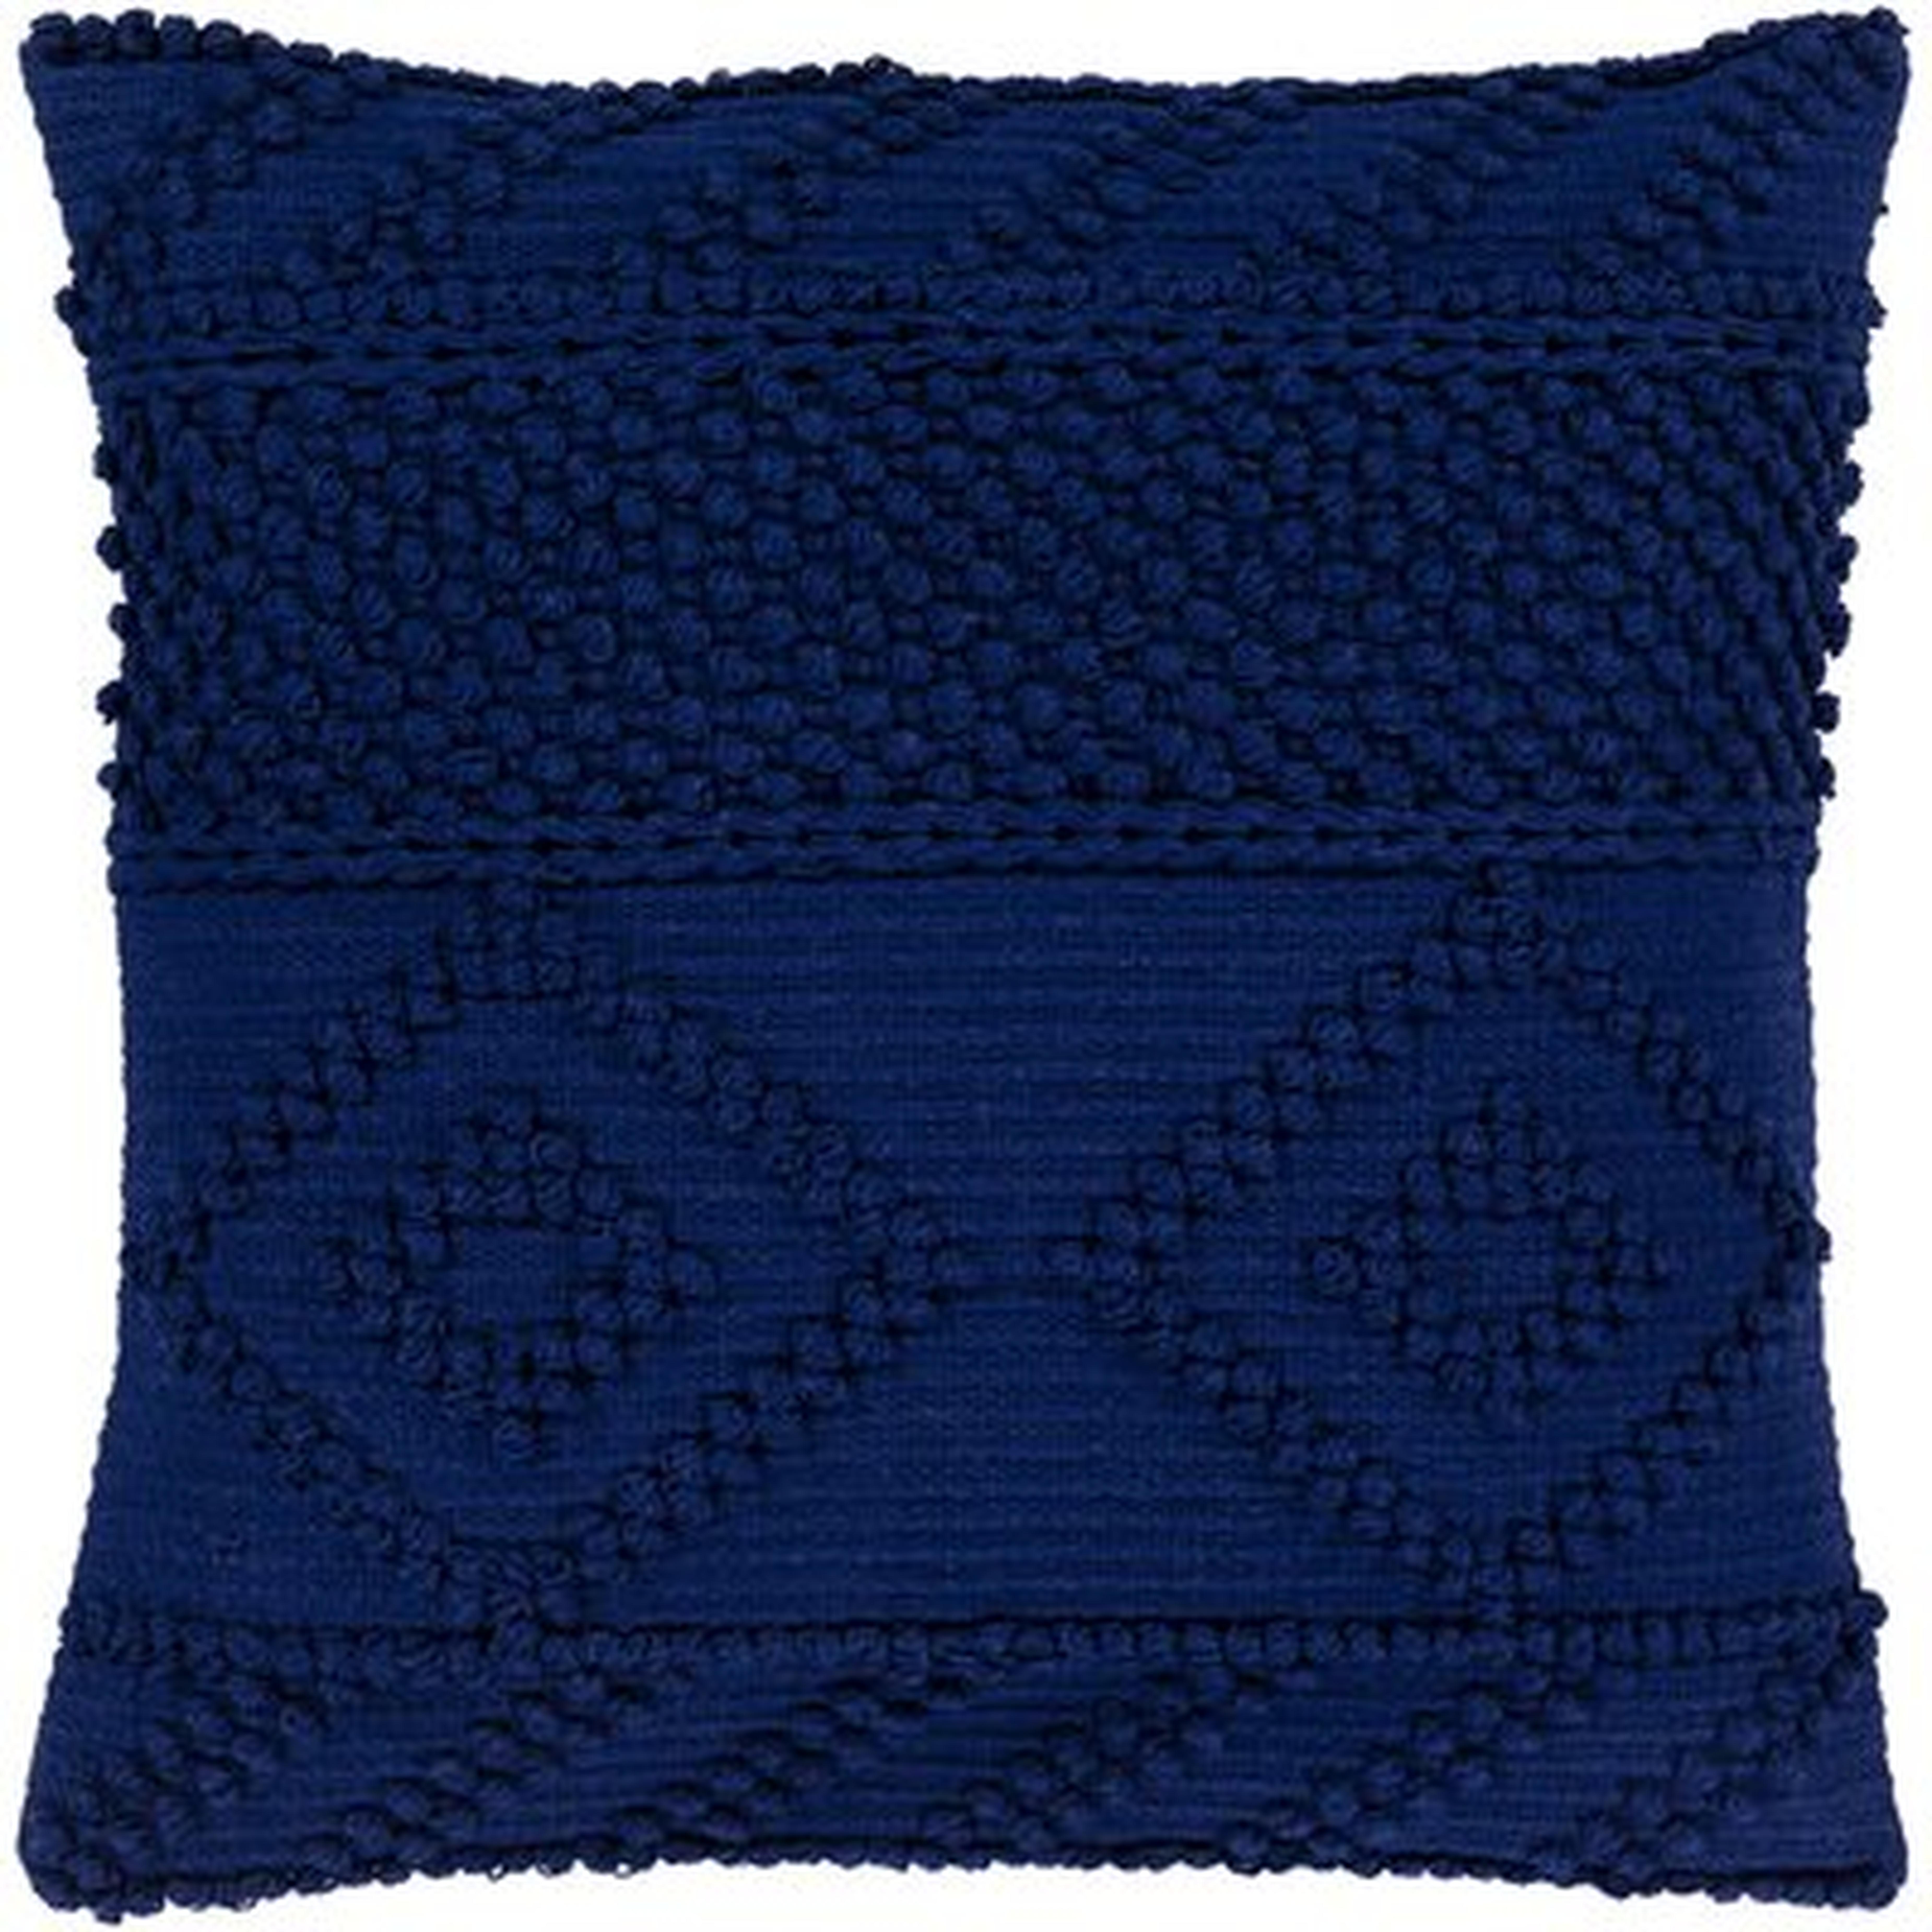 Statler Textured Cotton Geometric Throw Pillow - Wayfair